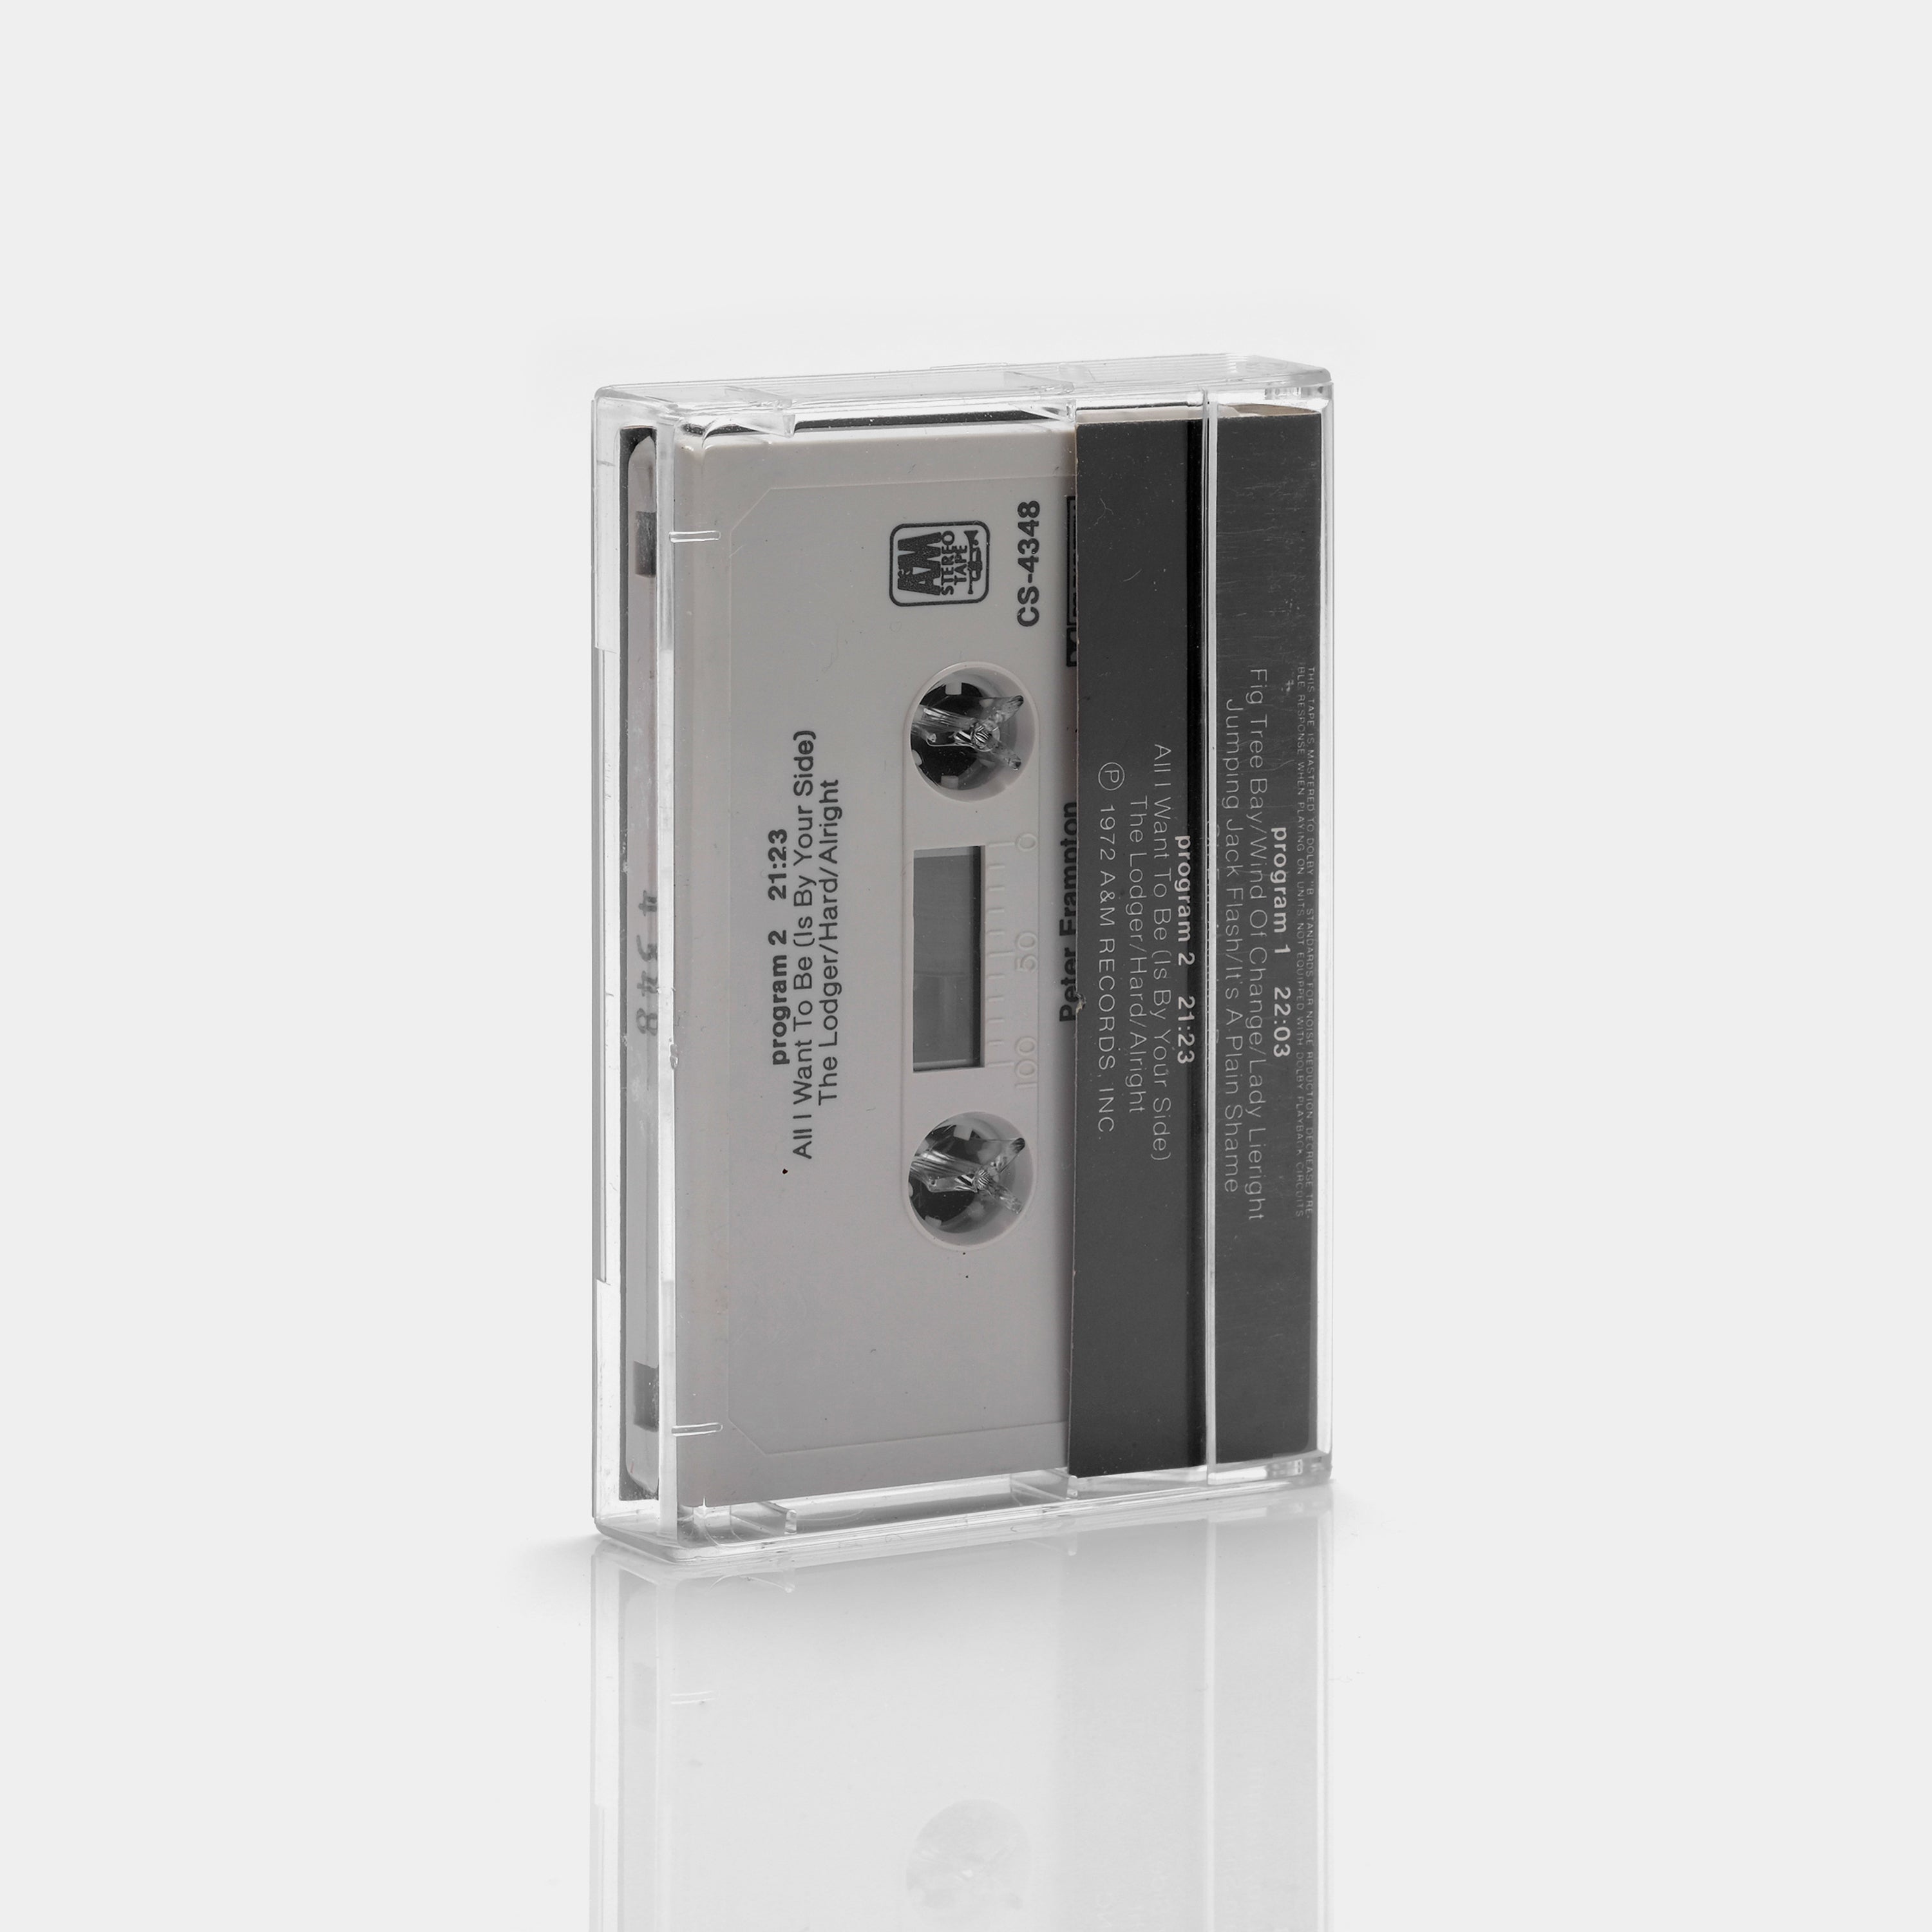 Peter Frampton - Wind Of Change Cassette Tape